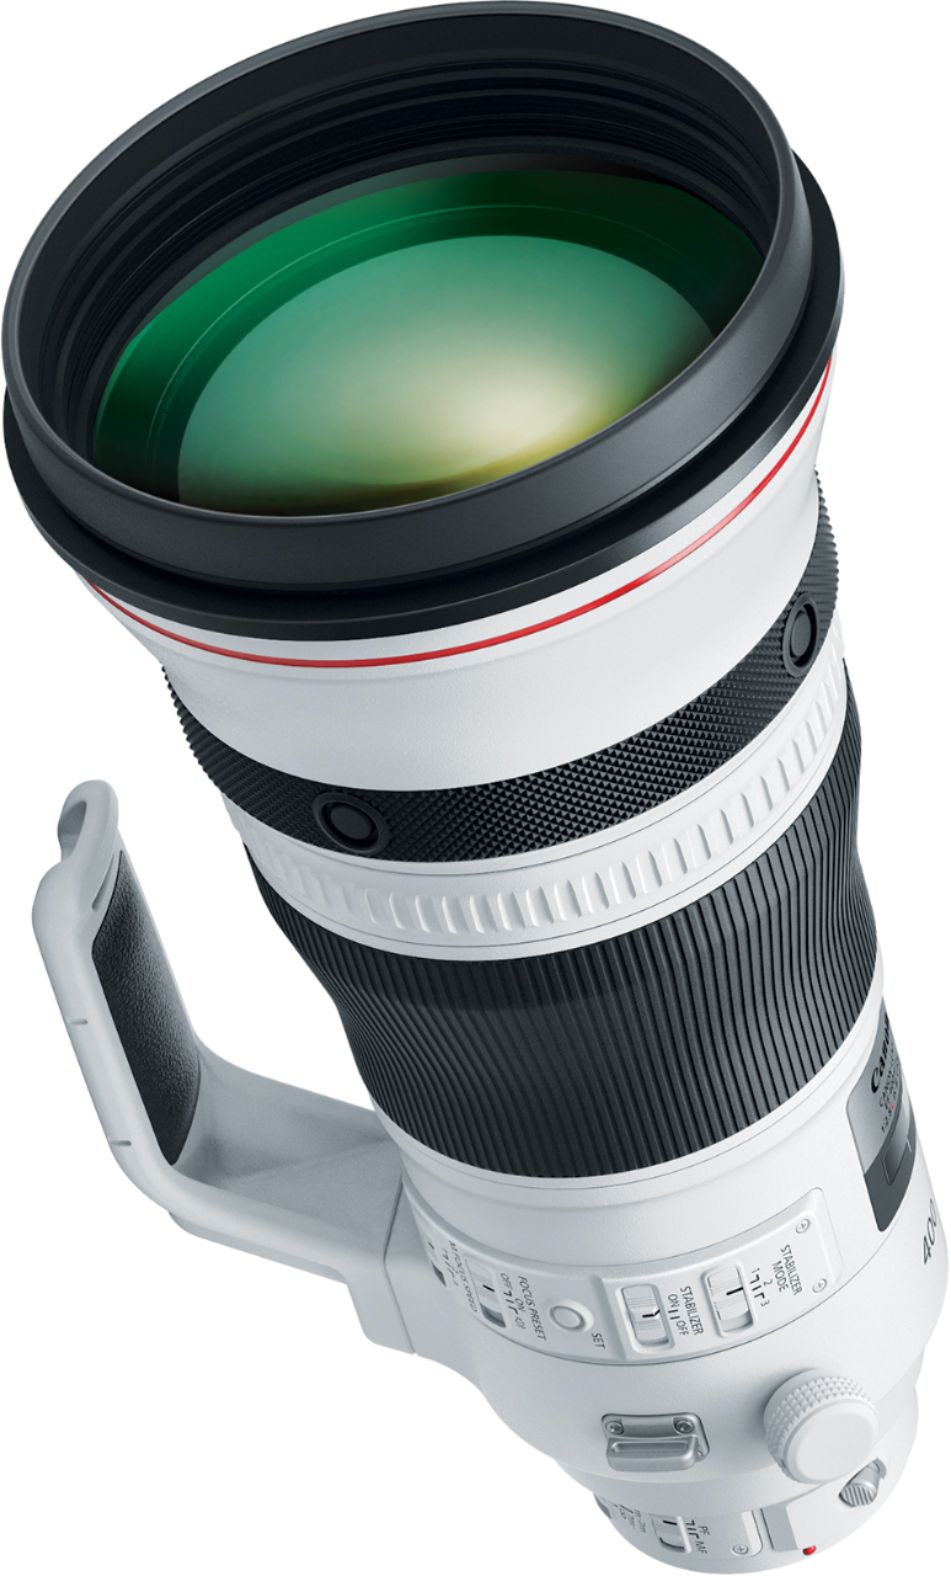 Back View: Nikon - AF-S Micro Nikkor 60mm f/2.8G ED Macro Lens - Black